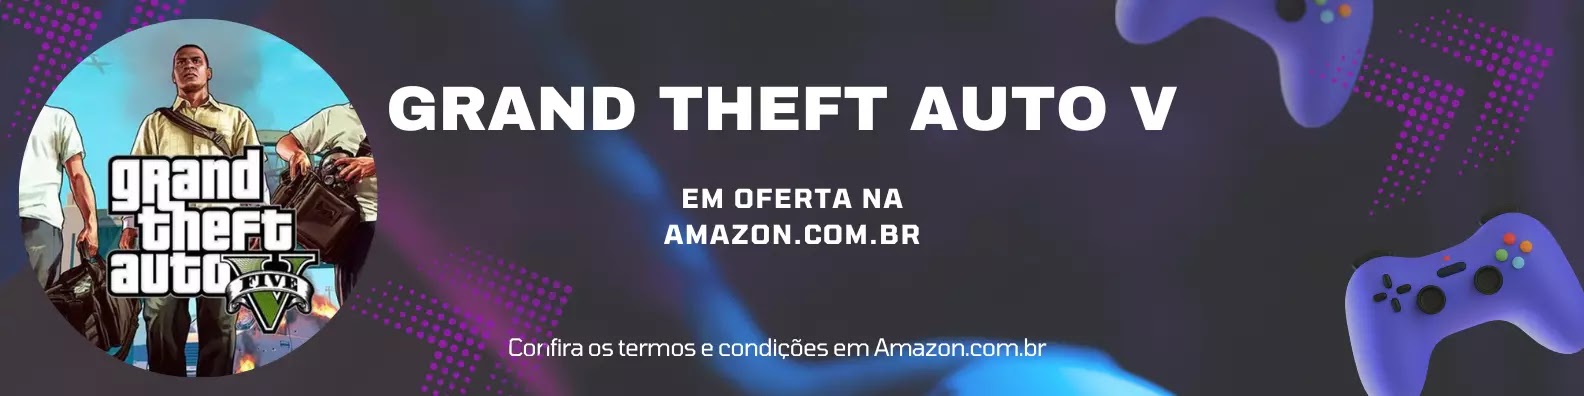 GTA Game Amazon